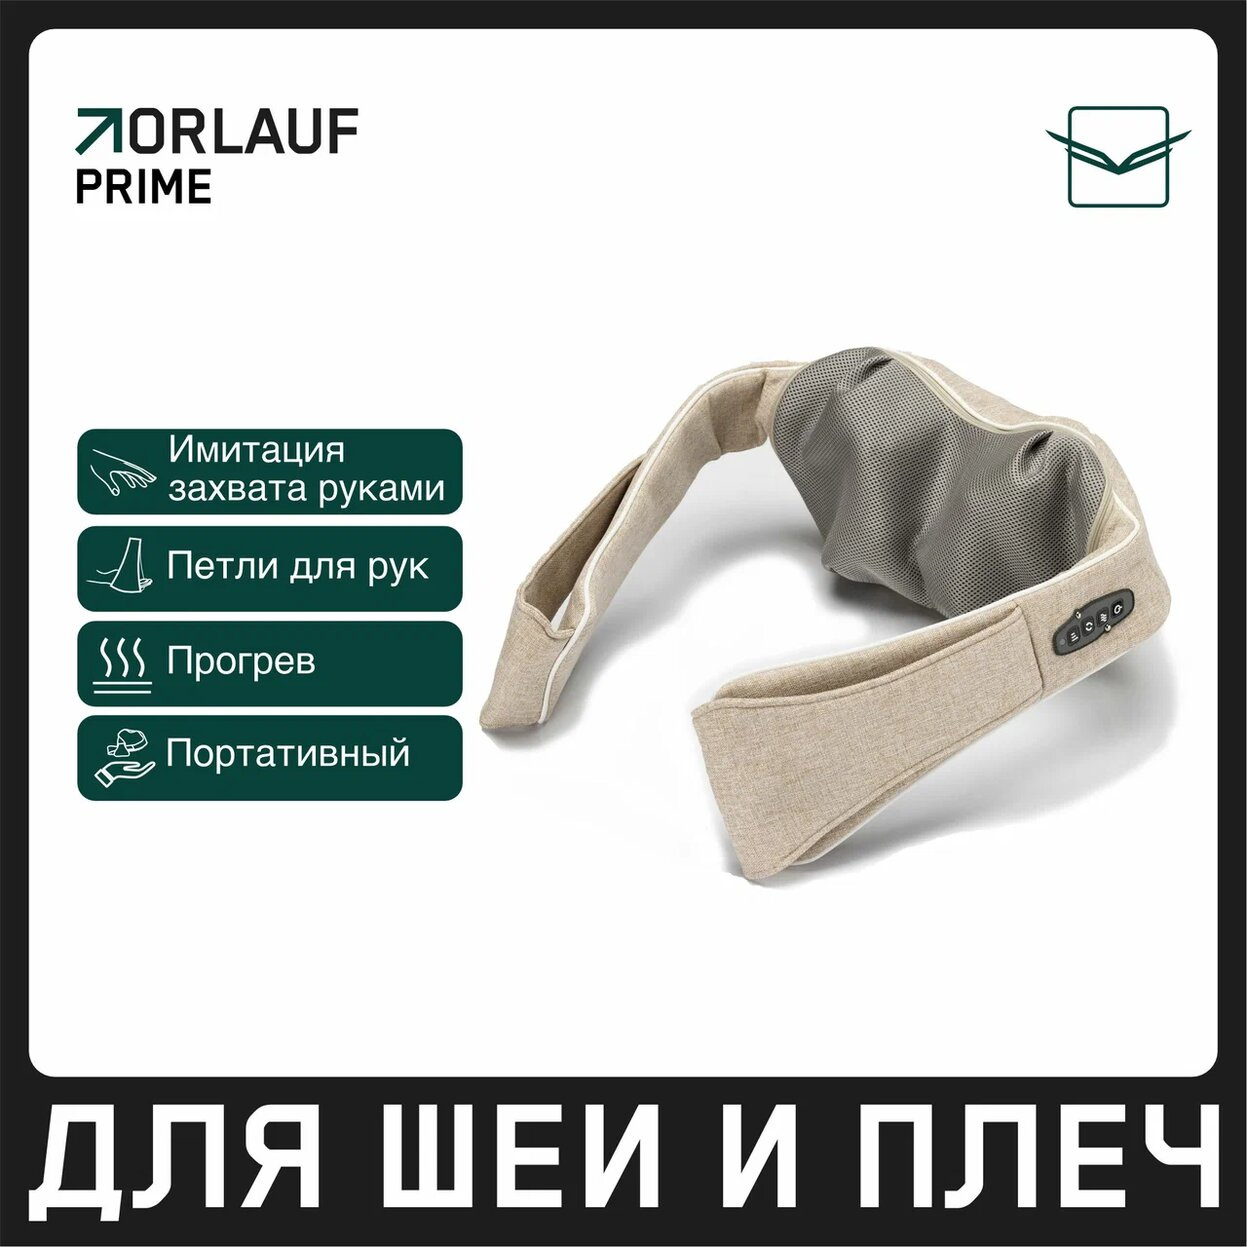 Orlauf Prime из каталога устройств для массажа в Воронеже по цене 11900 ₽